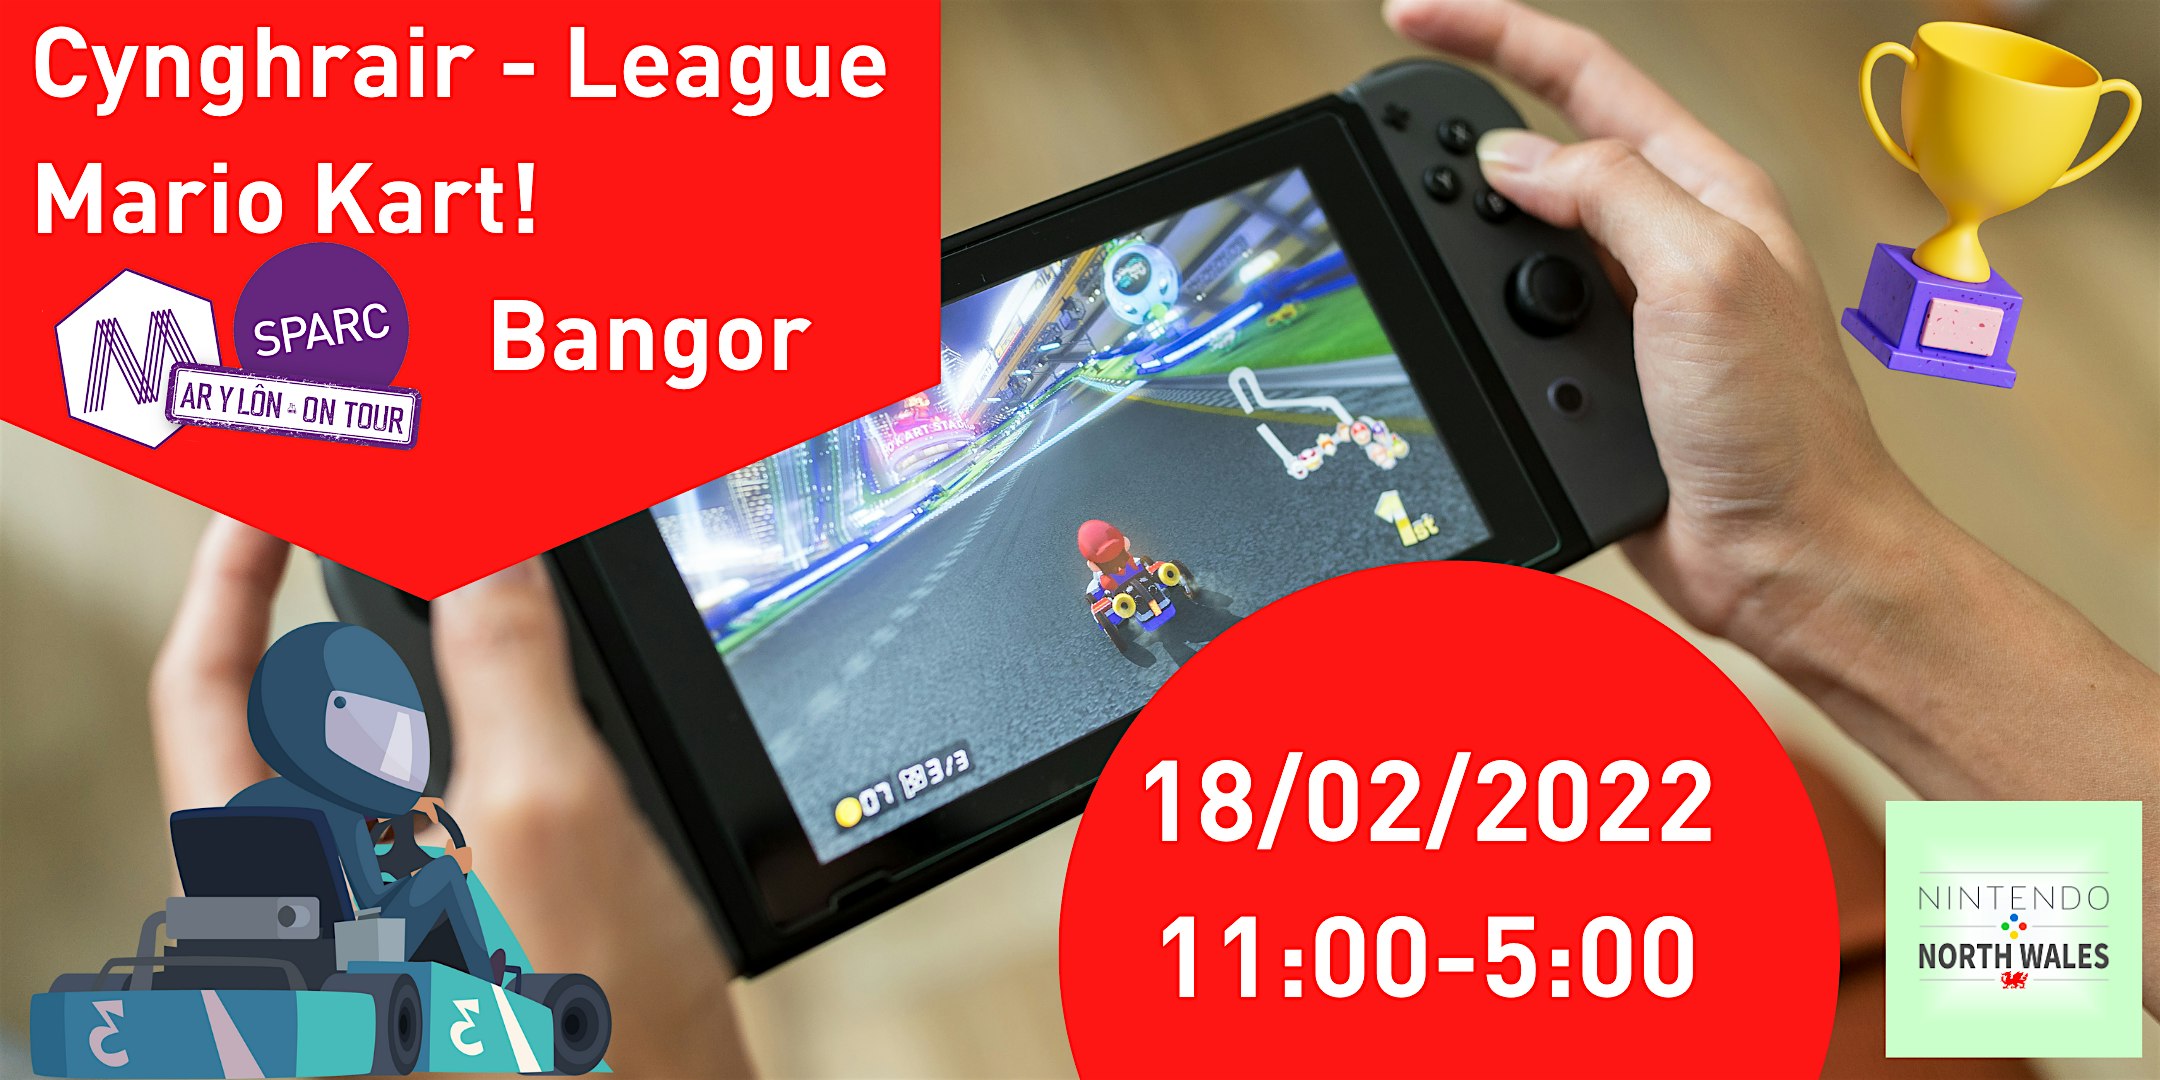 Nintendo North Wales – Cynghrair Mario Kart League!